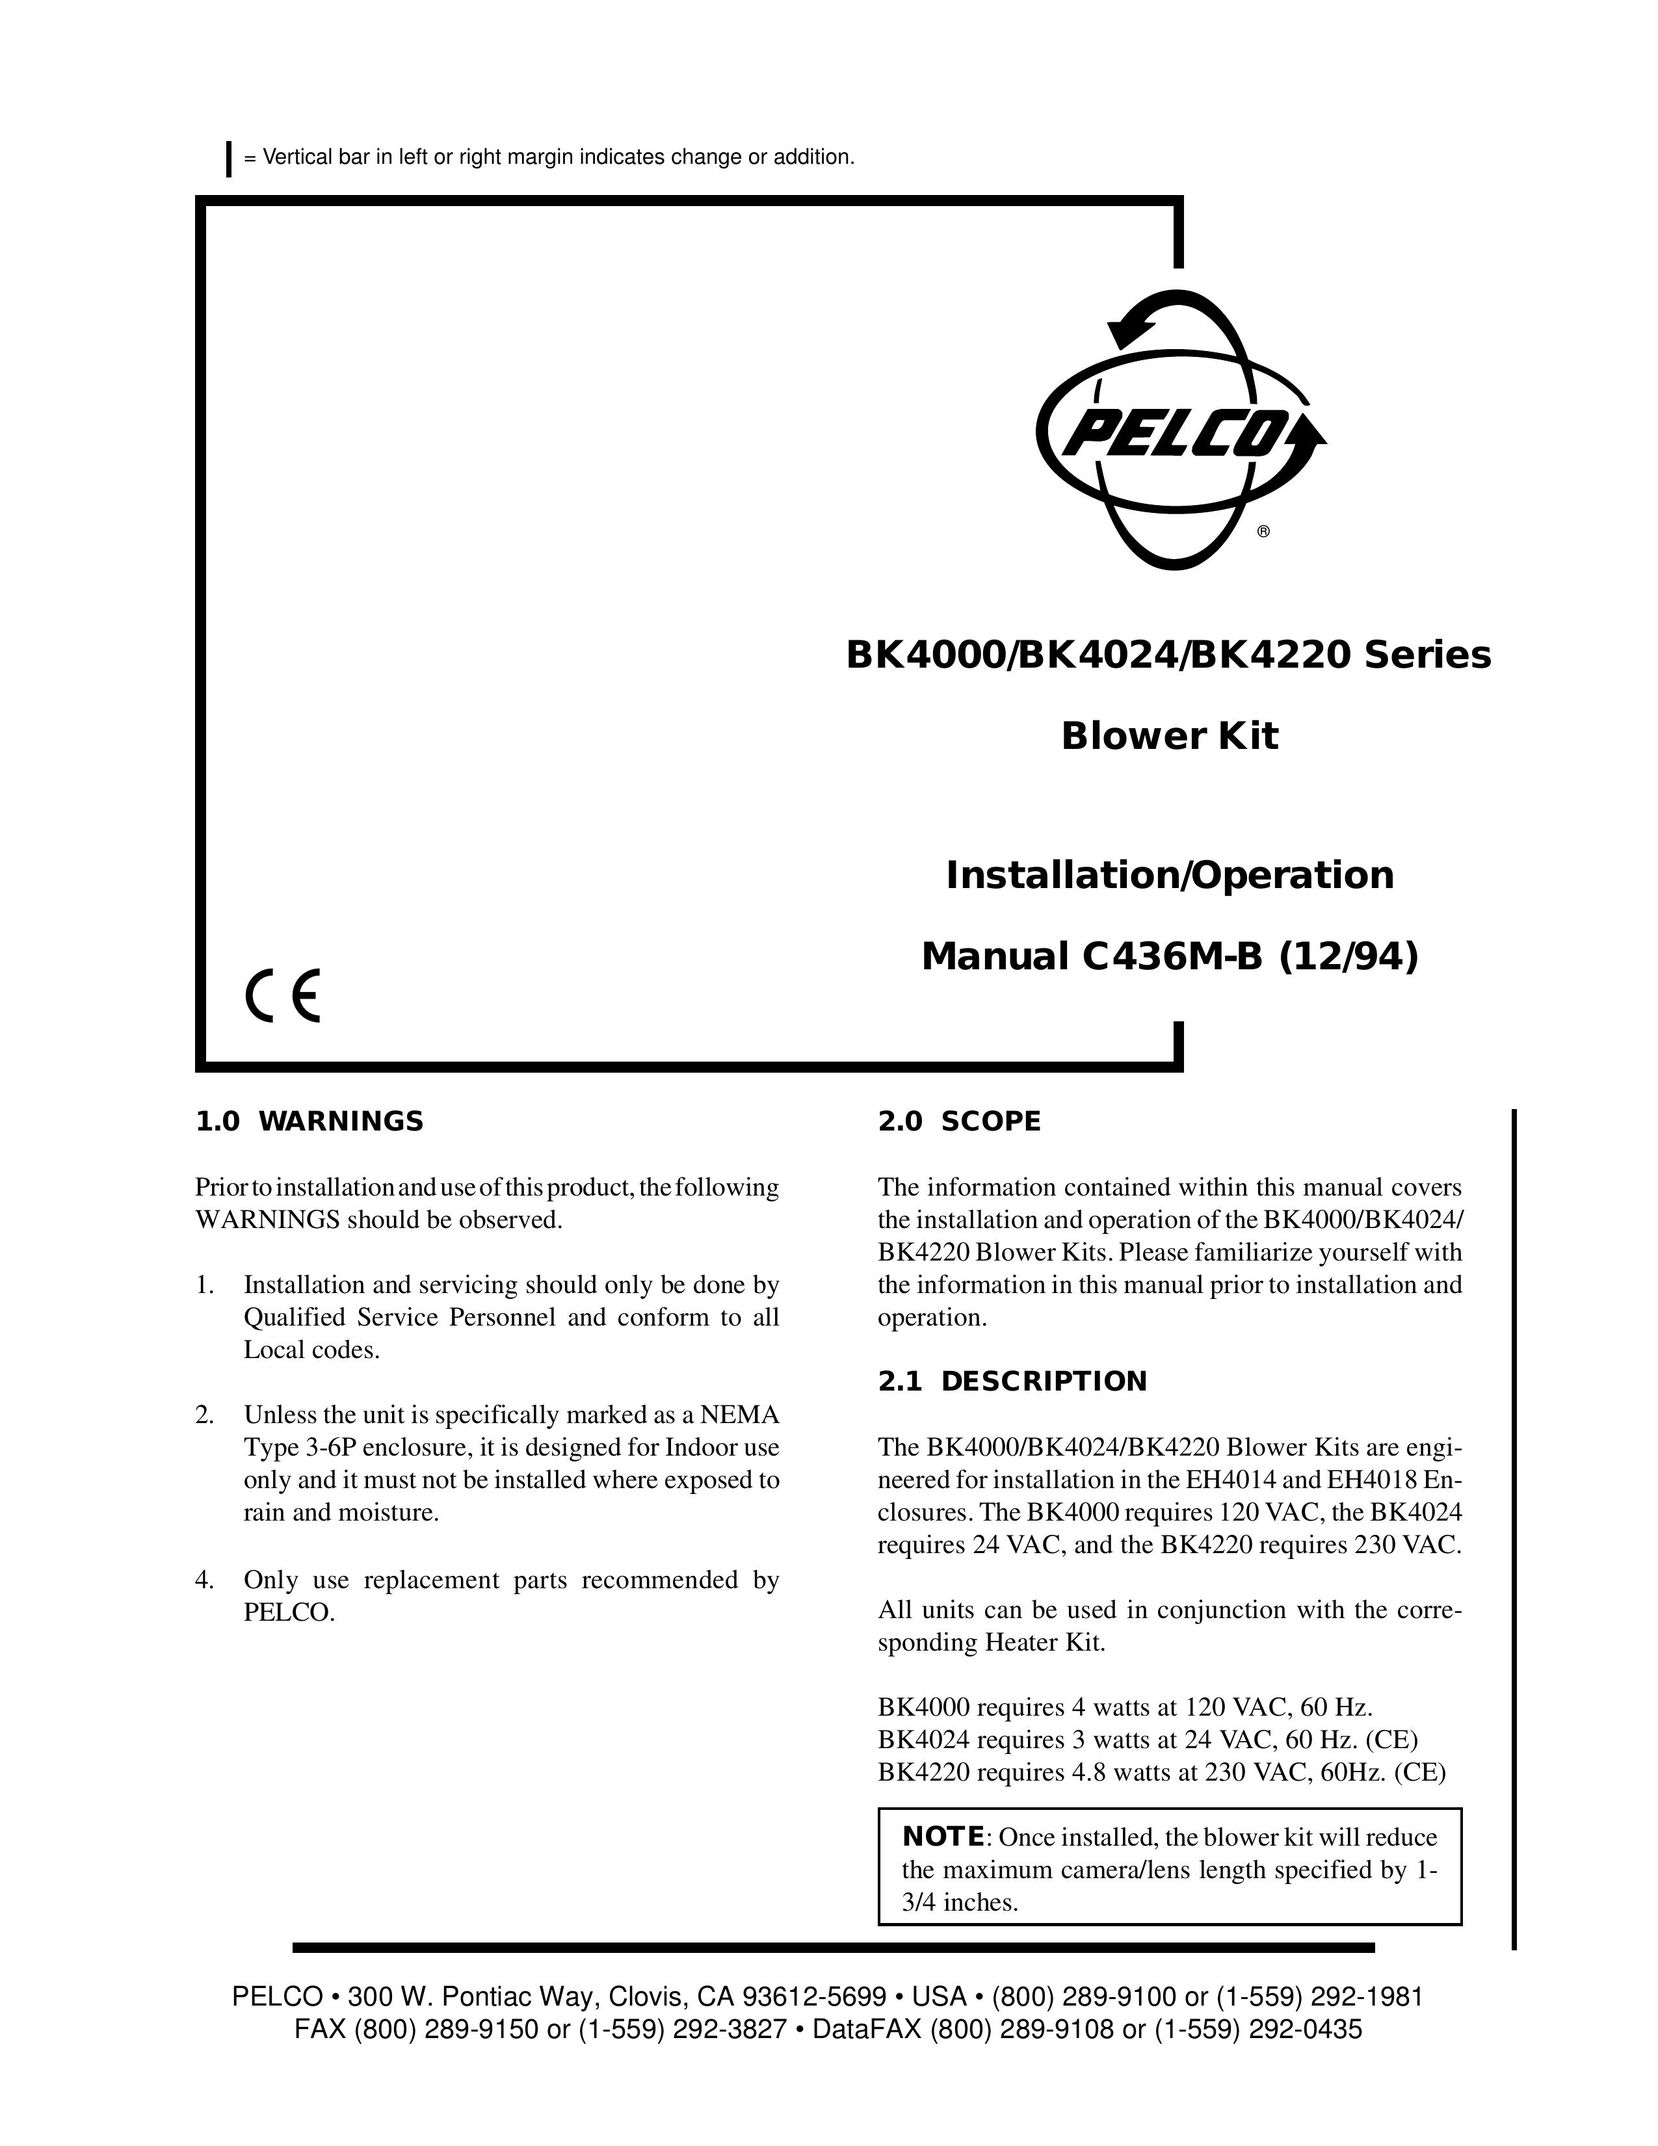 Pelco BK4024 Air Conditioner User Manual